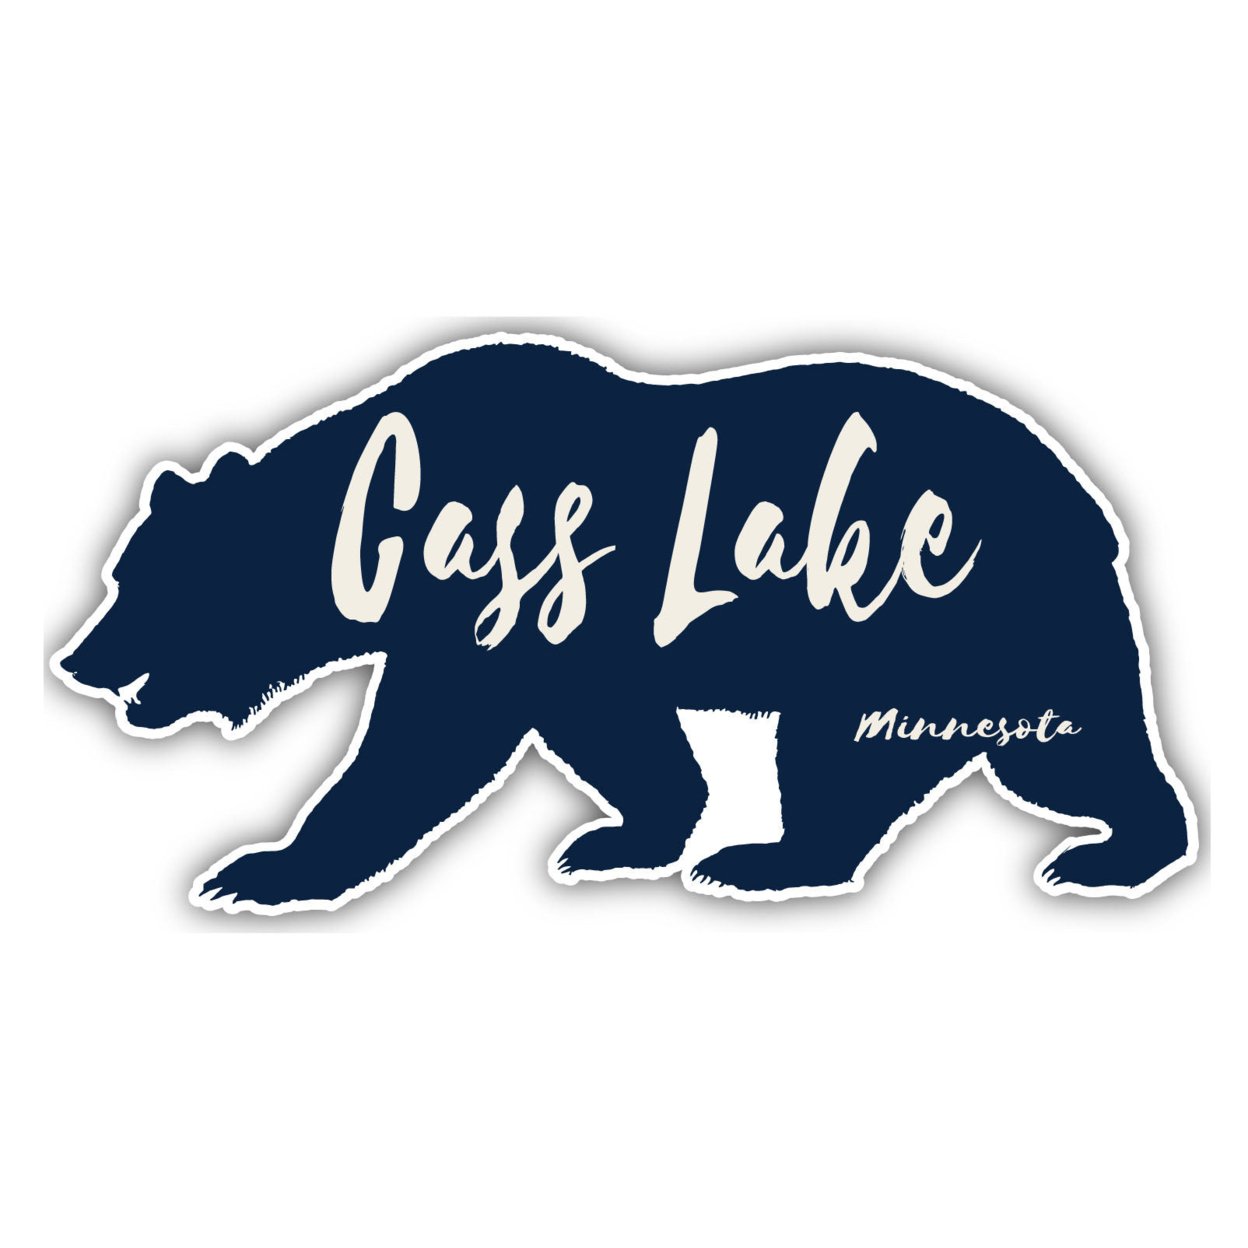 Cass Lake Minnesota Souvenir Decorative Stickers (Choose Theme And Size) - 4-Pack, 10-Inch, Bear